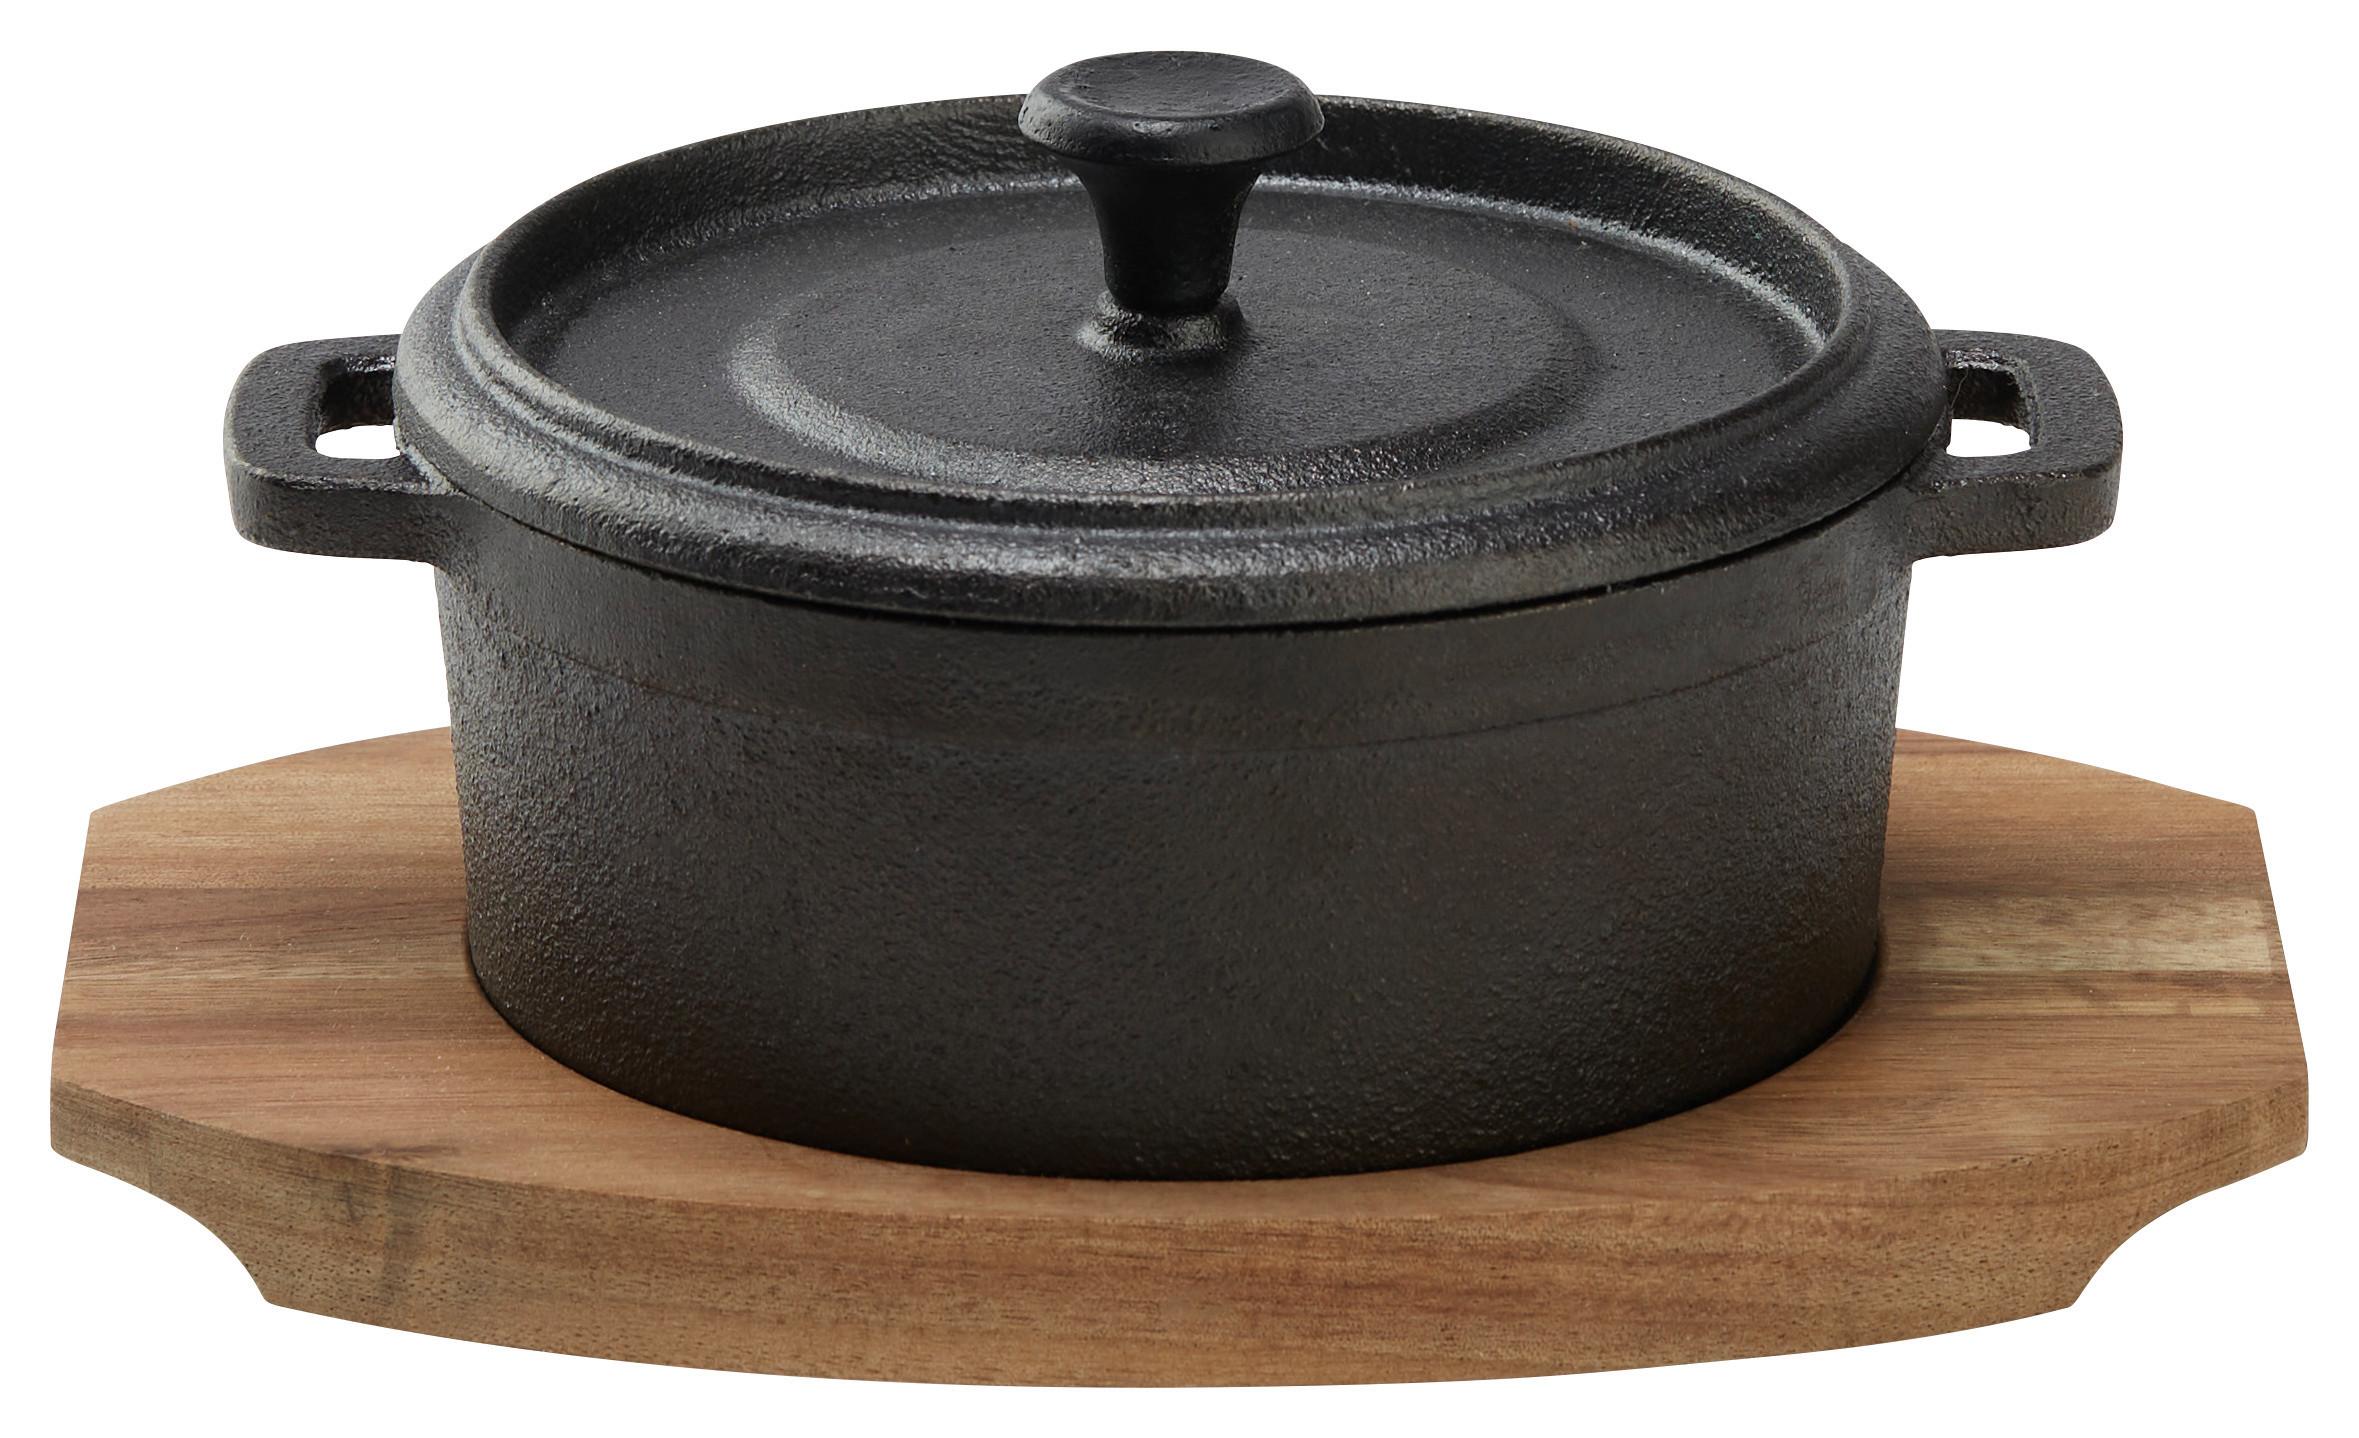 Litinový Hrnec Gourmet-M, 0,54l - černá/přírodní barvy, Konvenční, kov/dřevo (19/14/9,5cm) - Premium Living